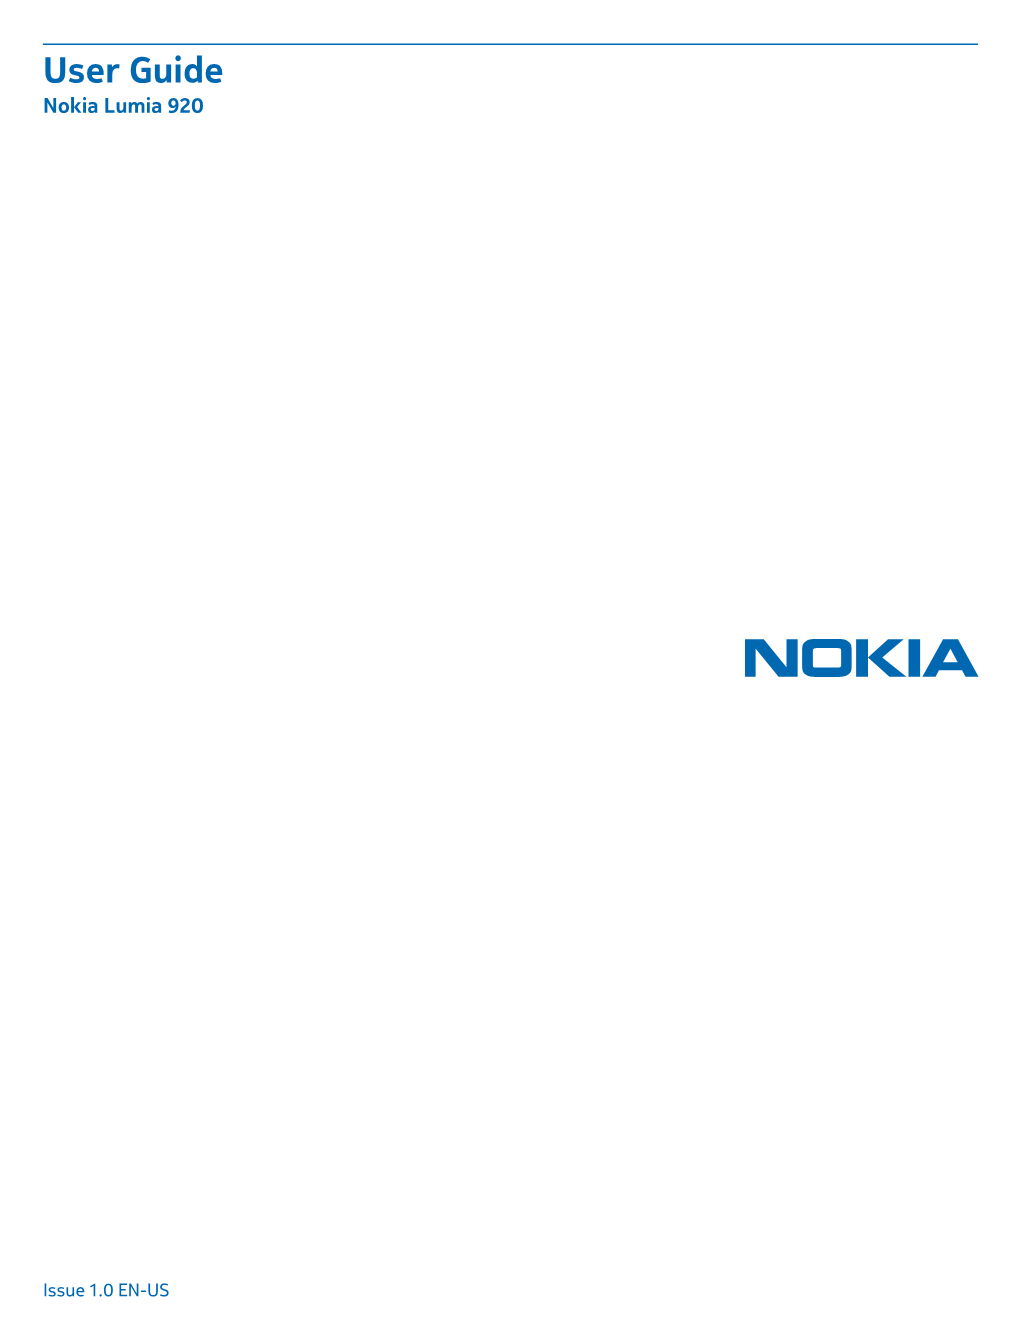 User Guide Nokia Lumia 920